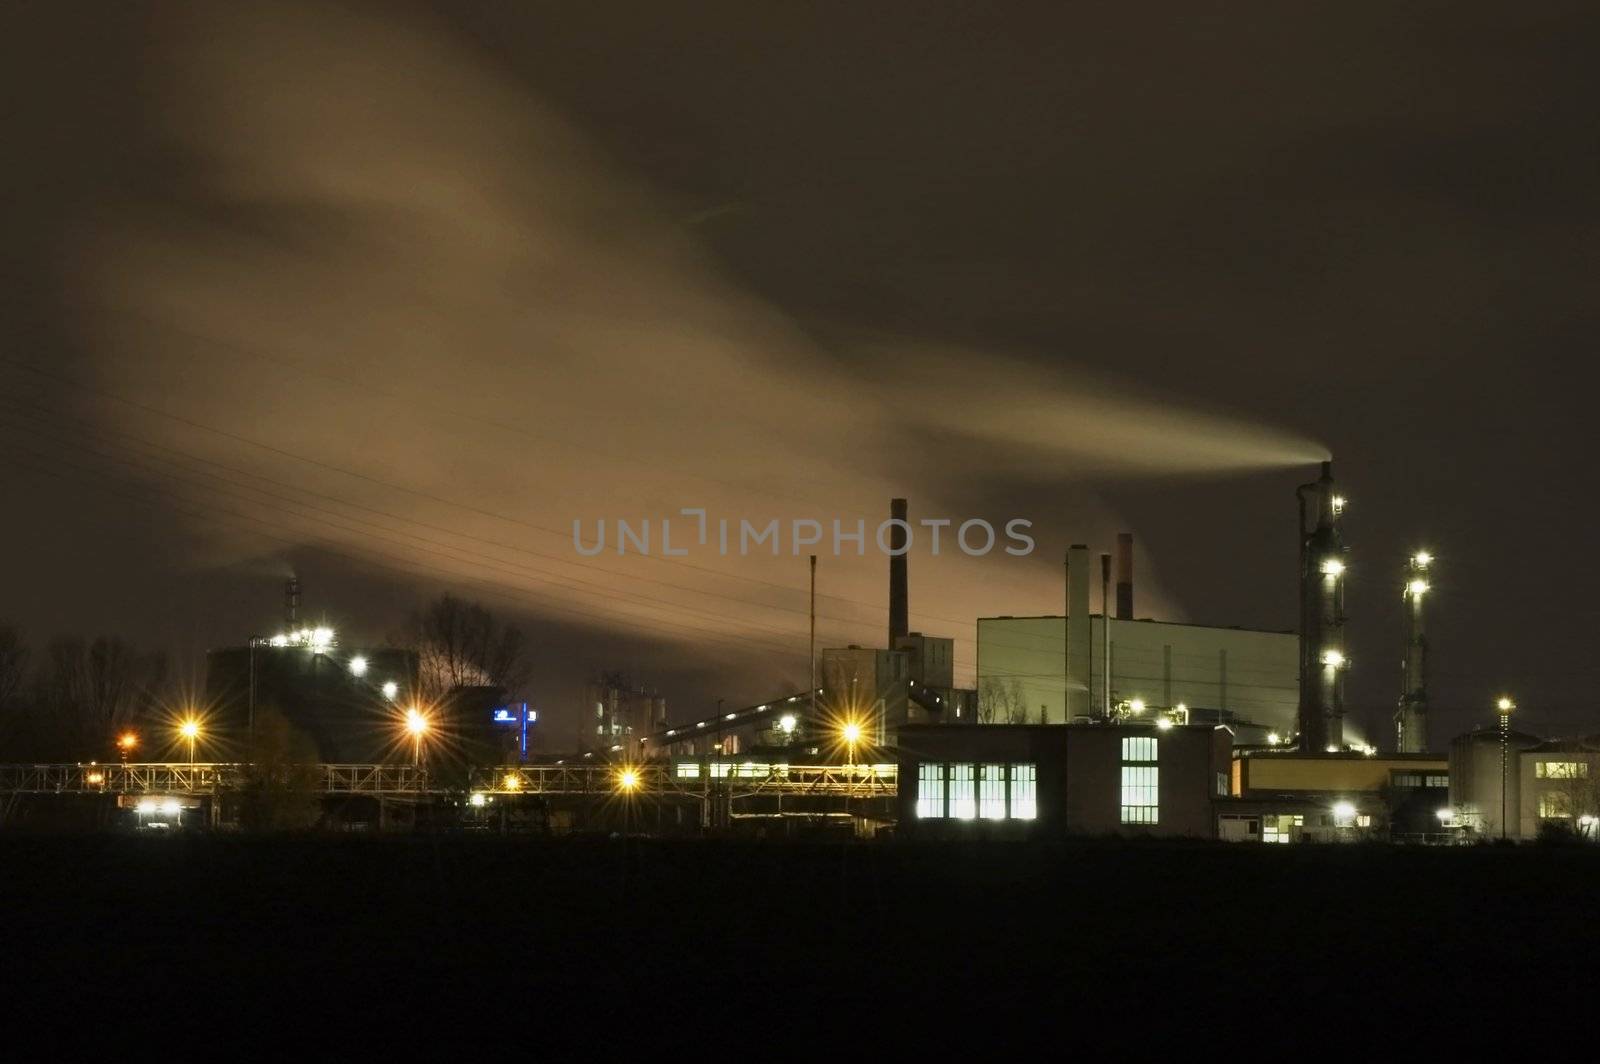 Industry at Night, taken in upper austria